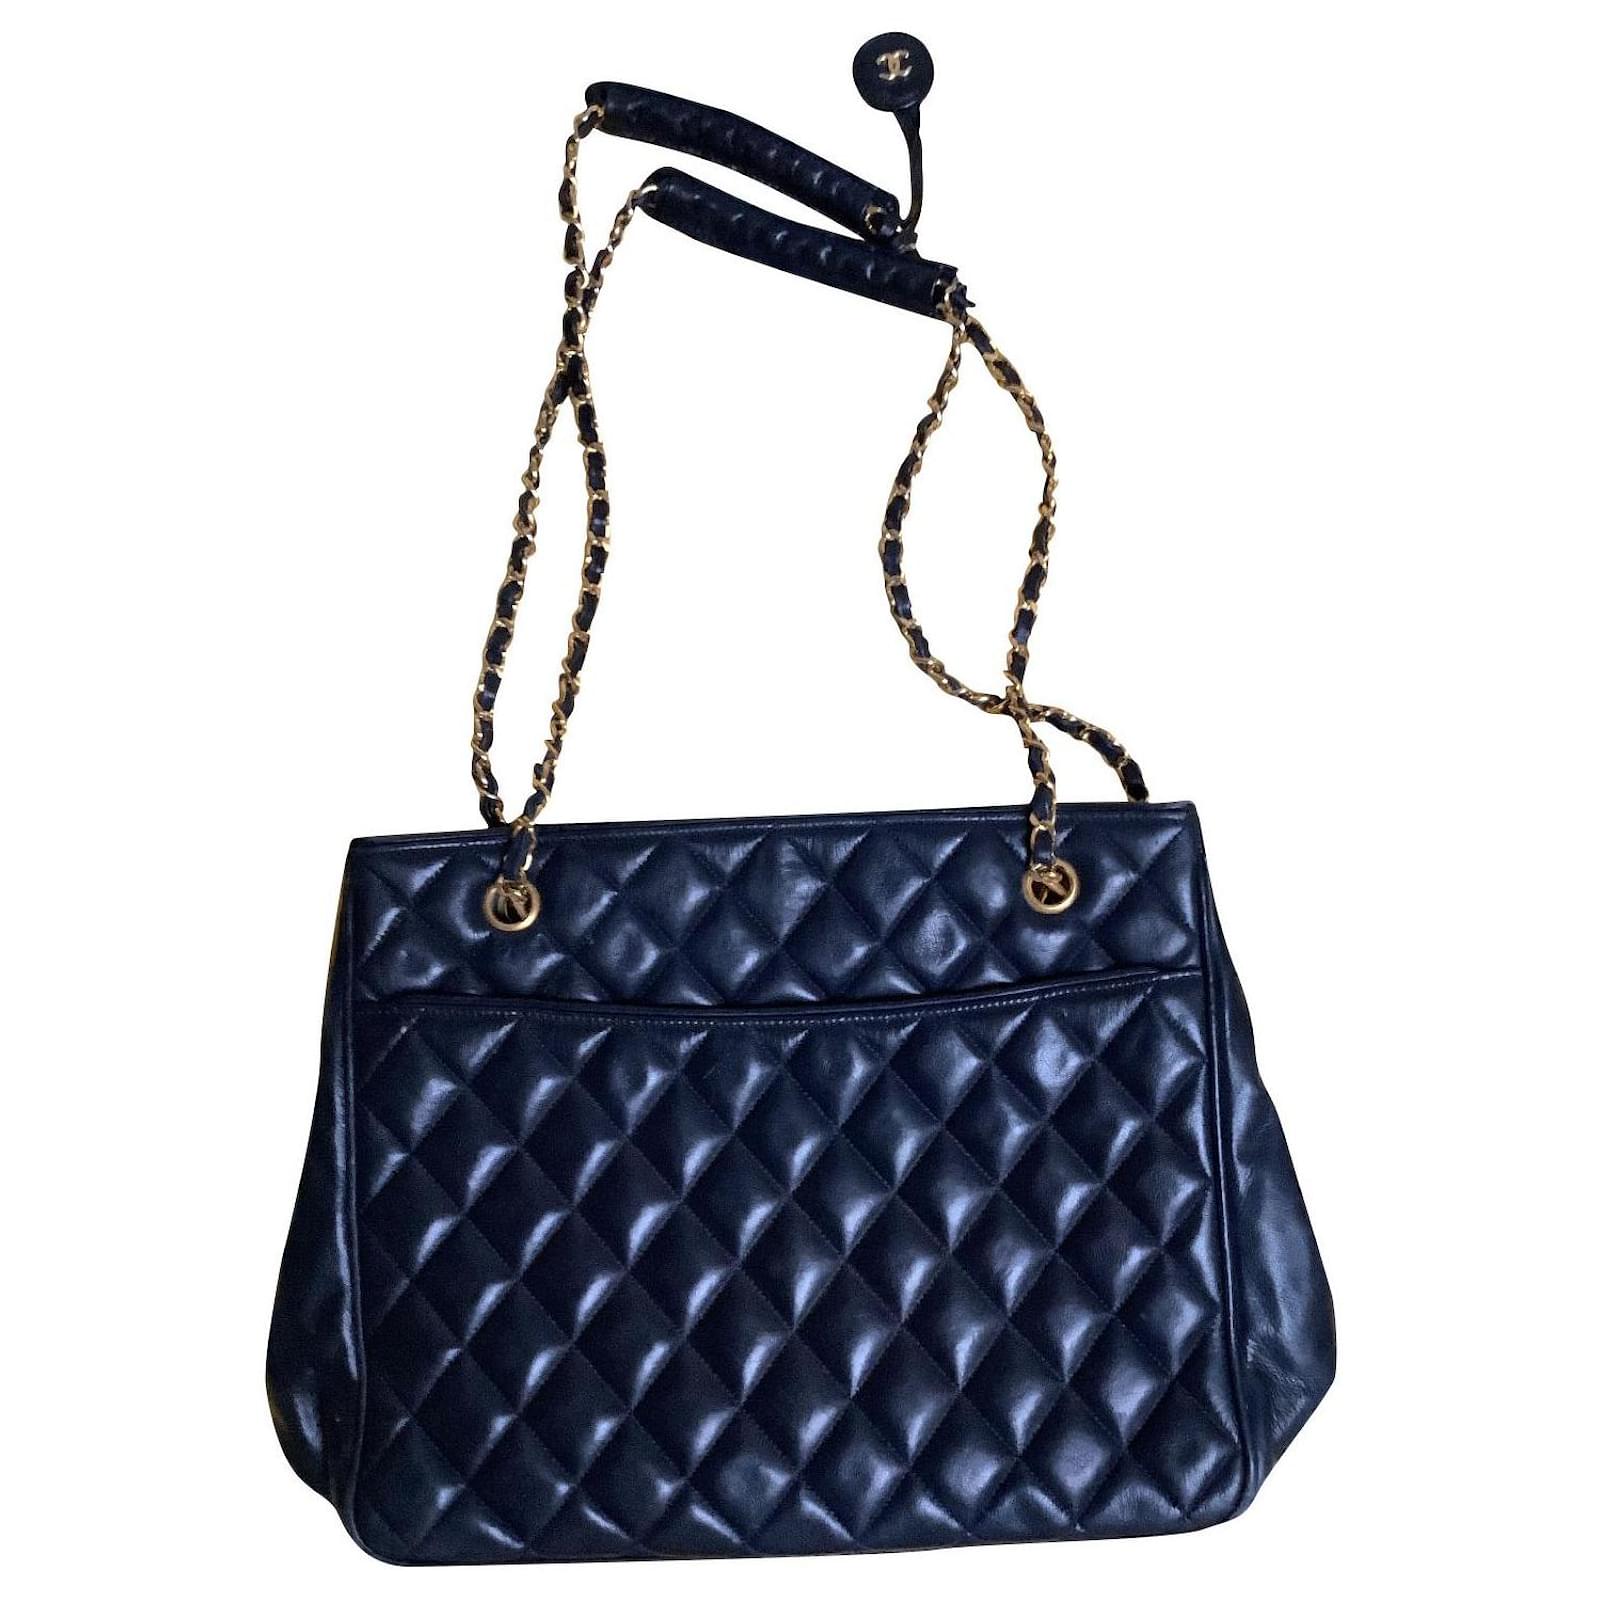 Handbags Chanel Big Bag